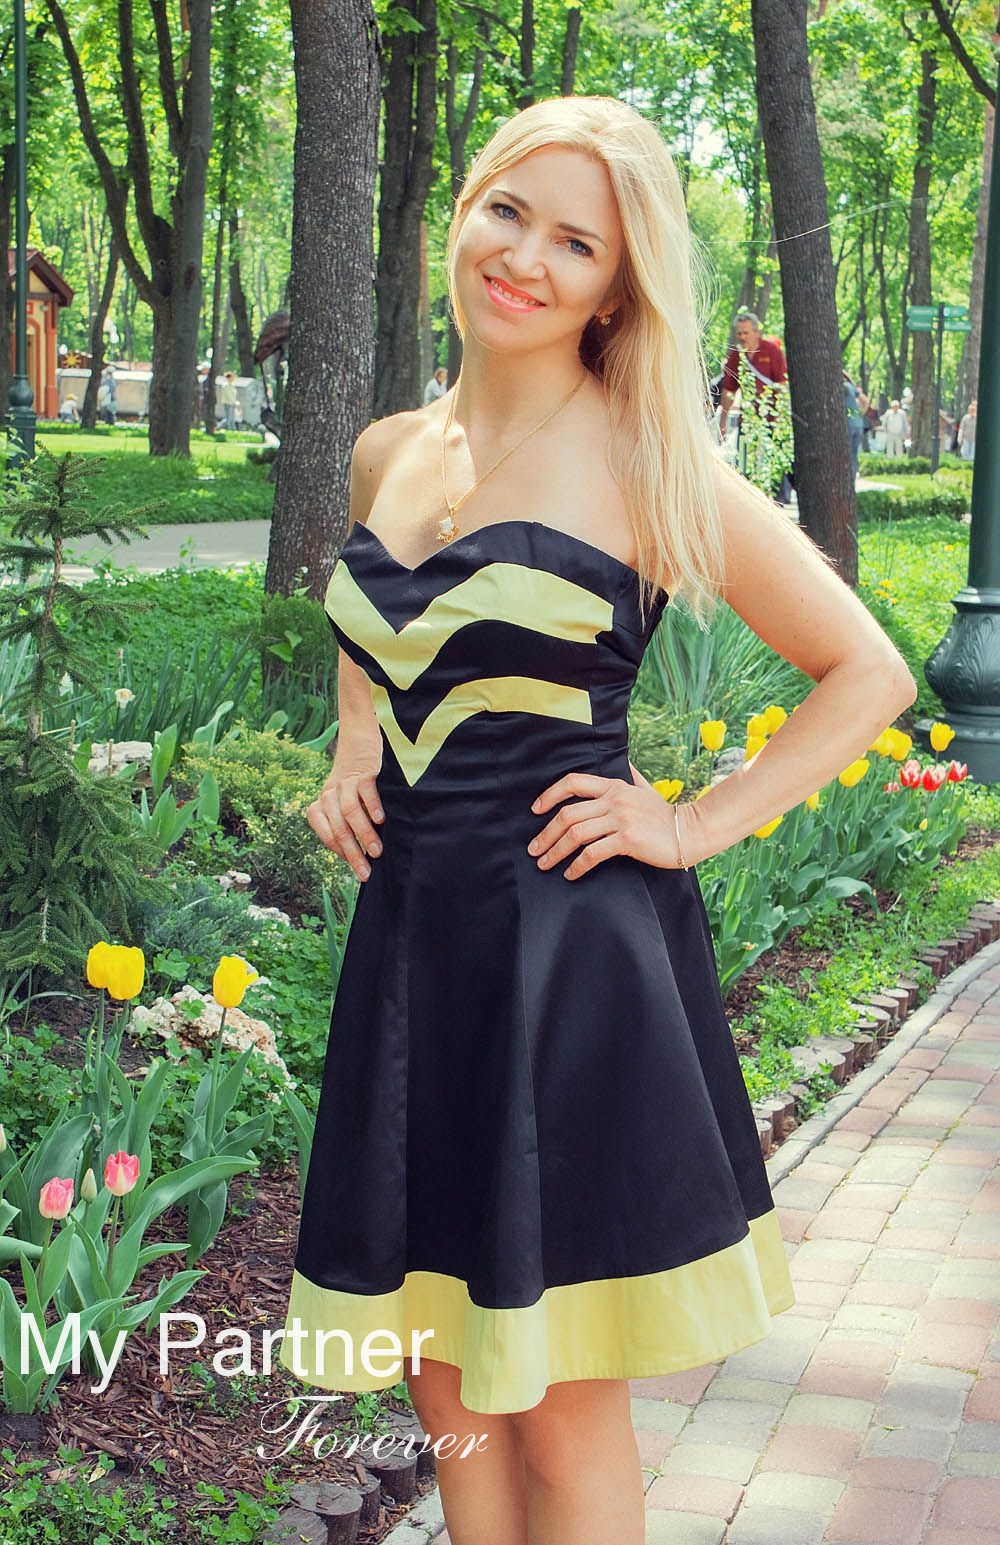 Meet Pretty Ukrainian Girl Elena from Kharkov, Ukraine